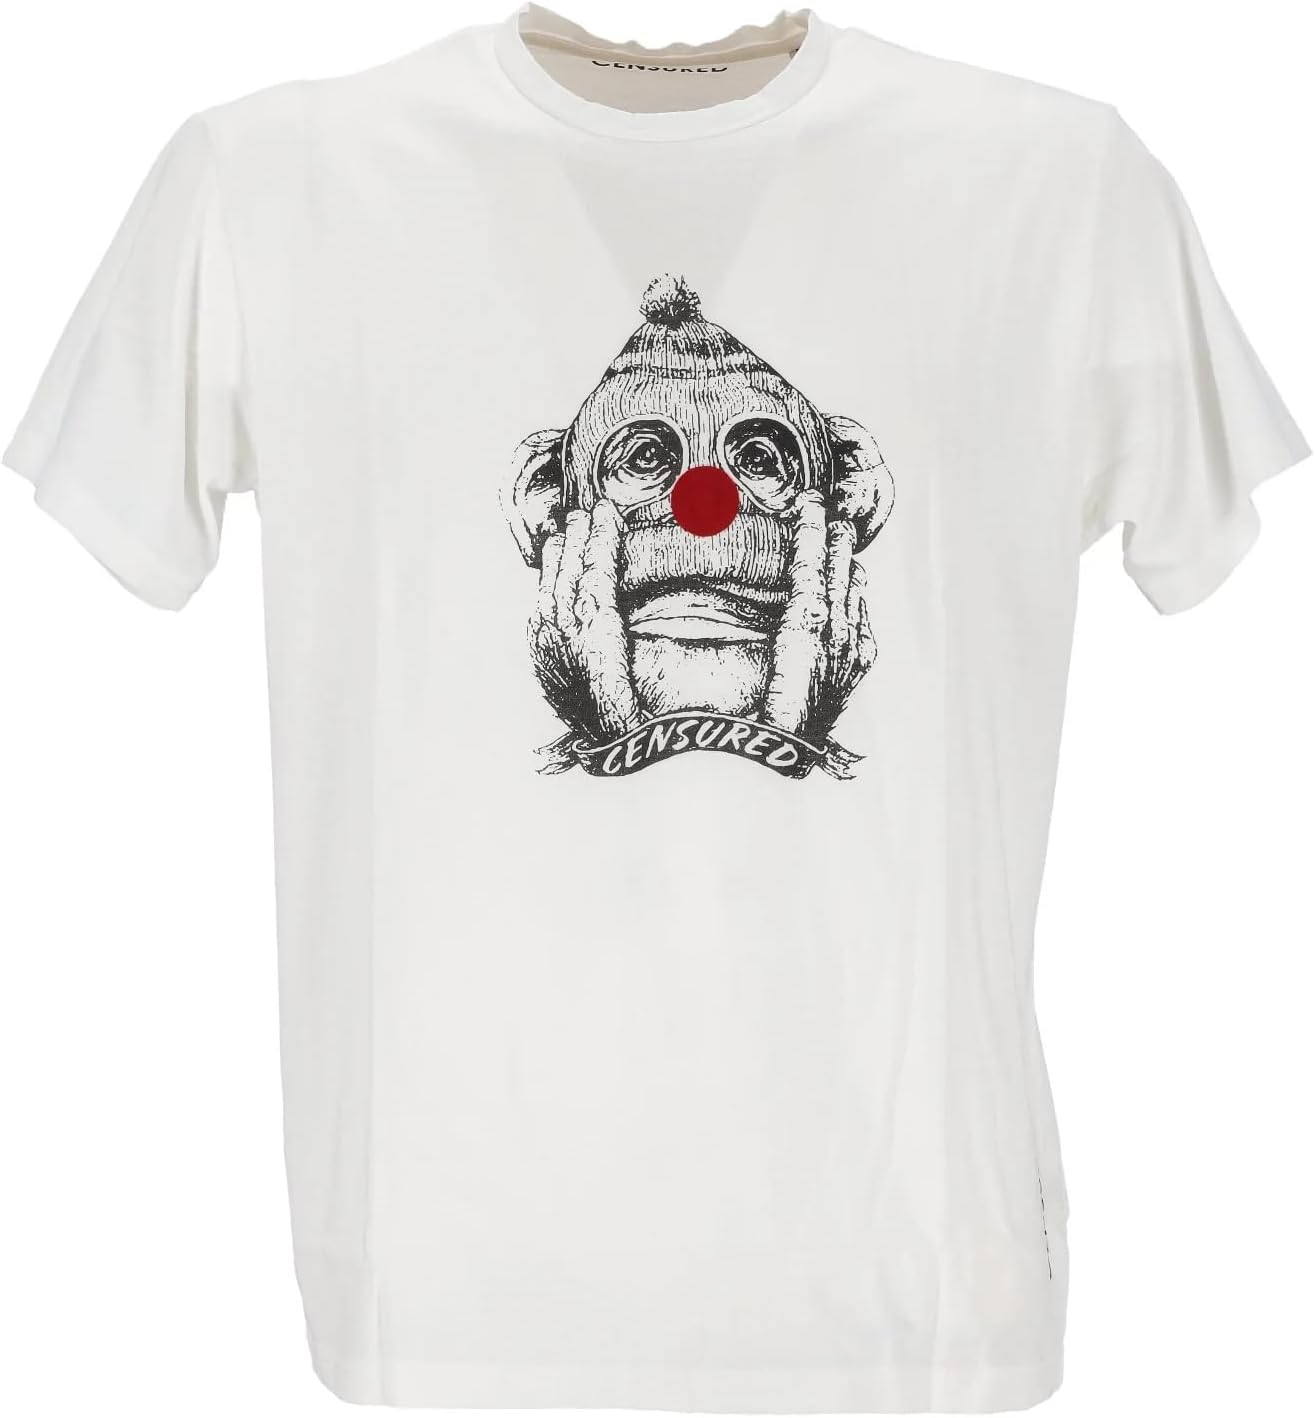 CENSURED T-shirt Uomo - Bianco modello TMC214